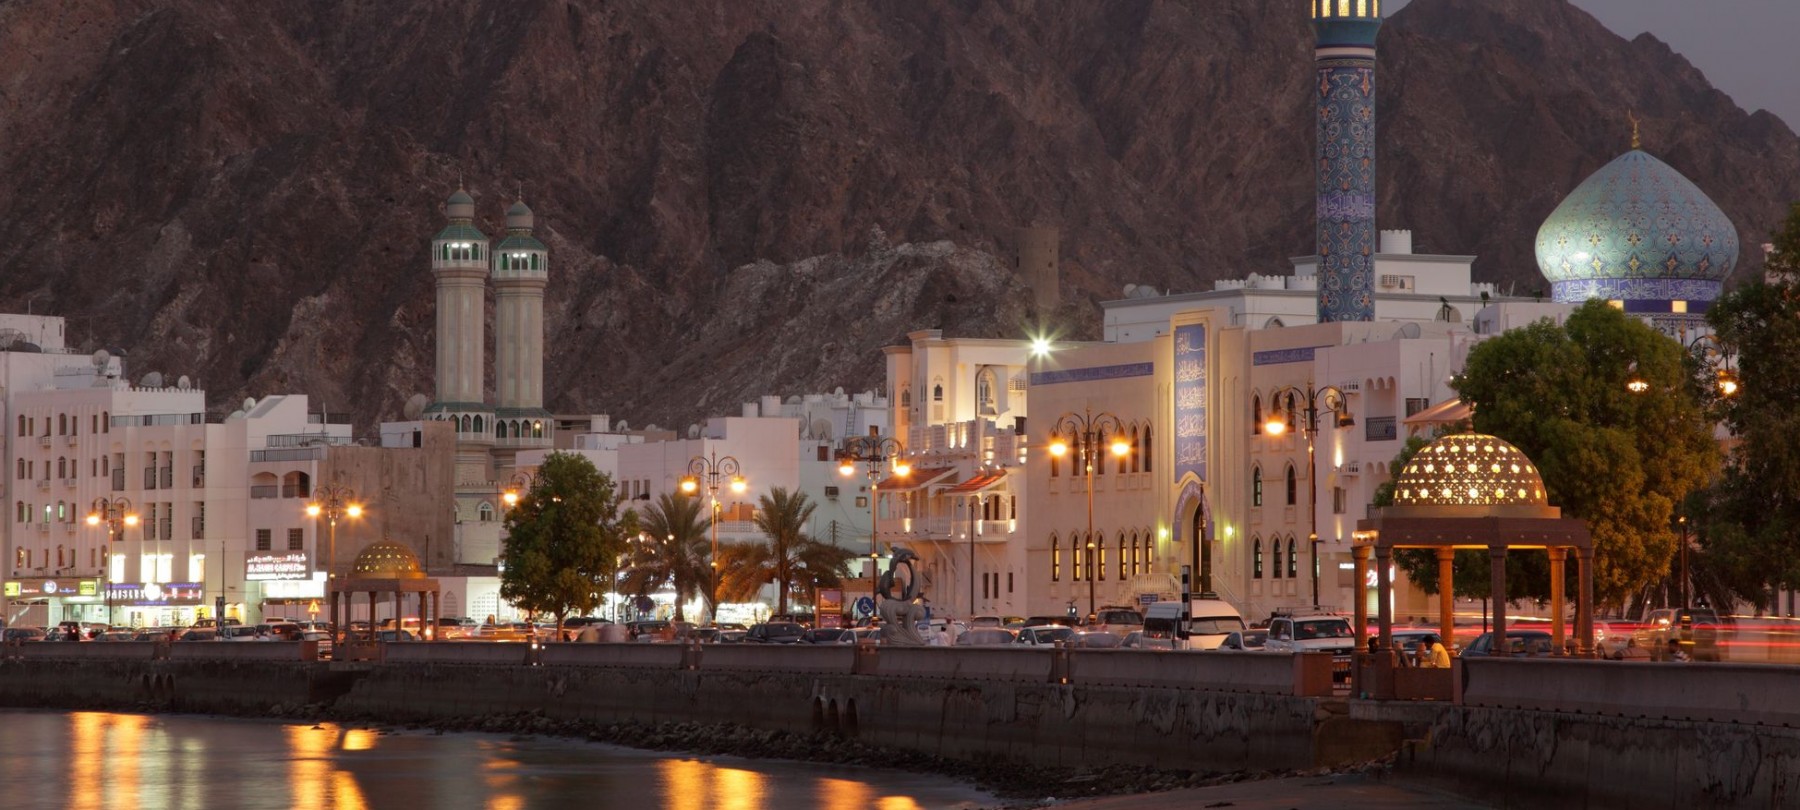 Muttrah-Corniche-in-Muscat-Sultanate-of-Oman[1]